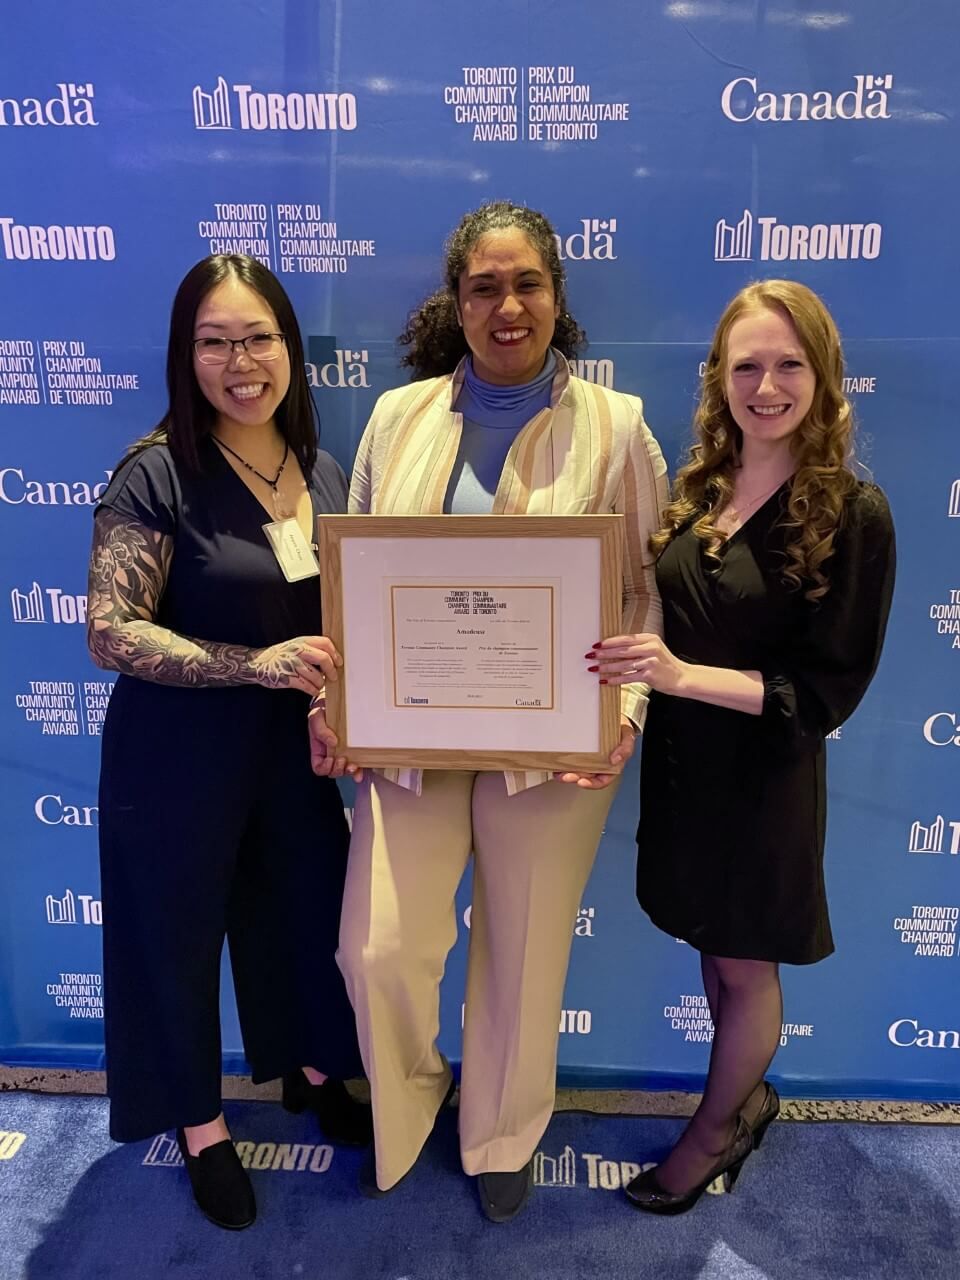 Amadeusz's management team at the Toronto Community Champion award